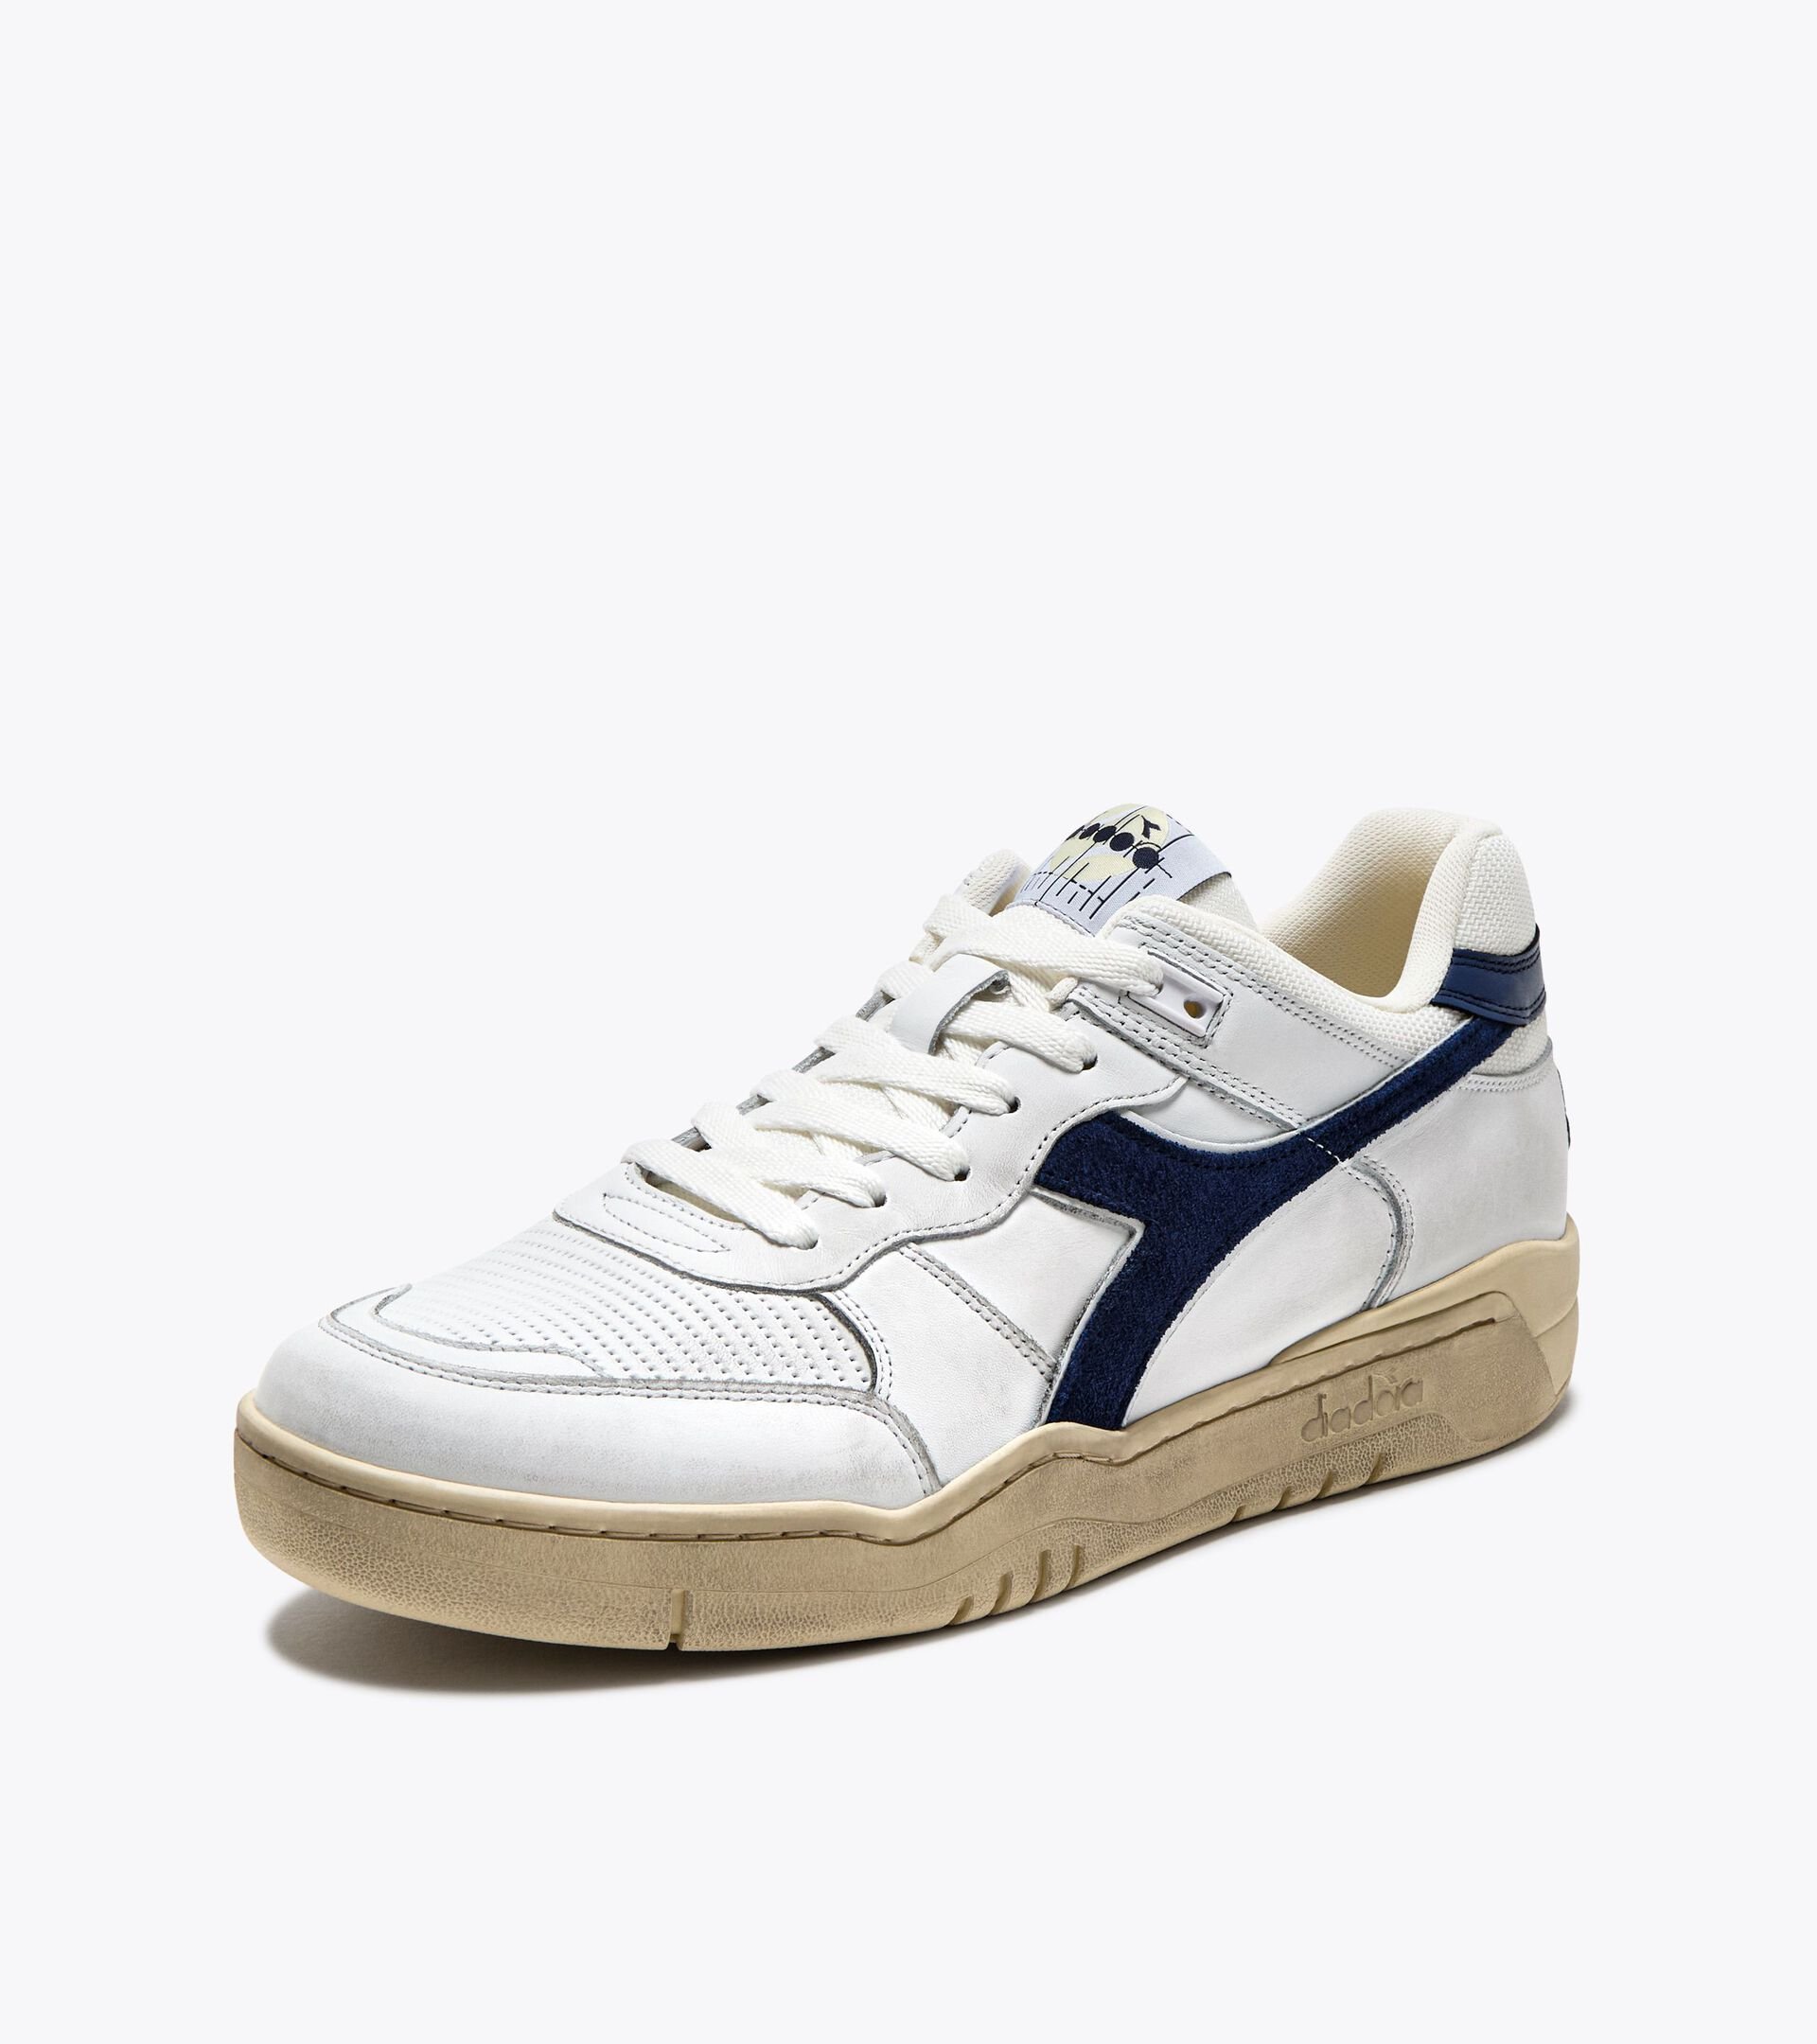 Heritage shoe - Gender Neutral B.560 USED WHITE/BLUE CORSAIR - Diadora